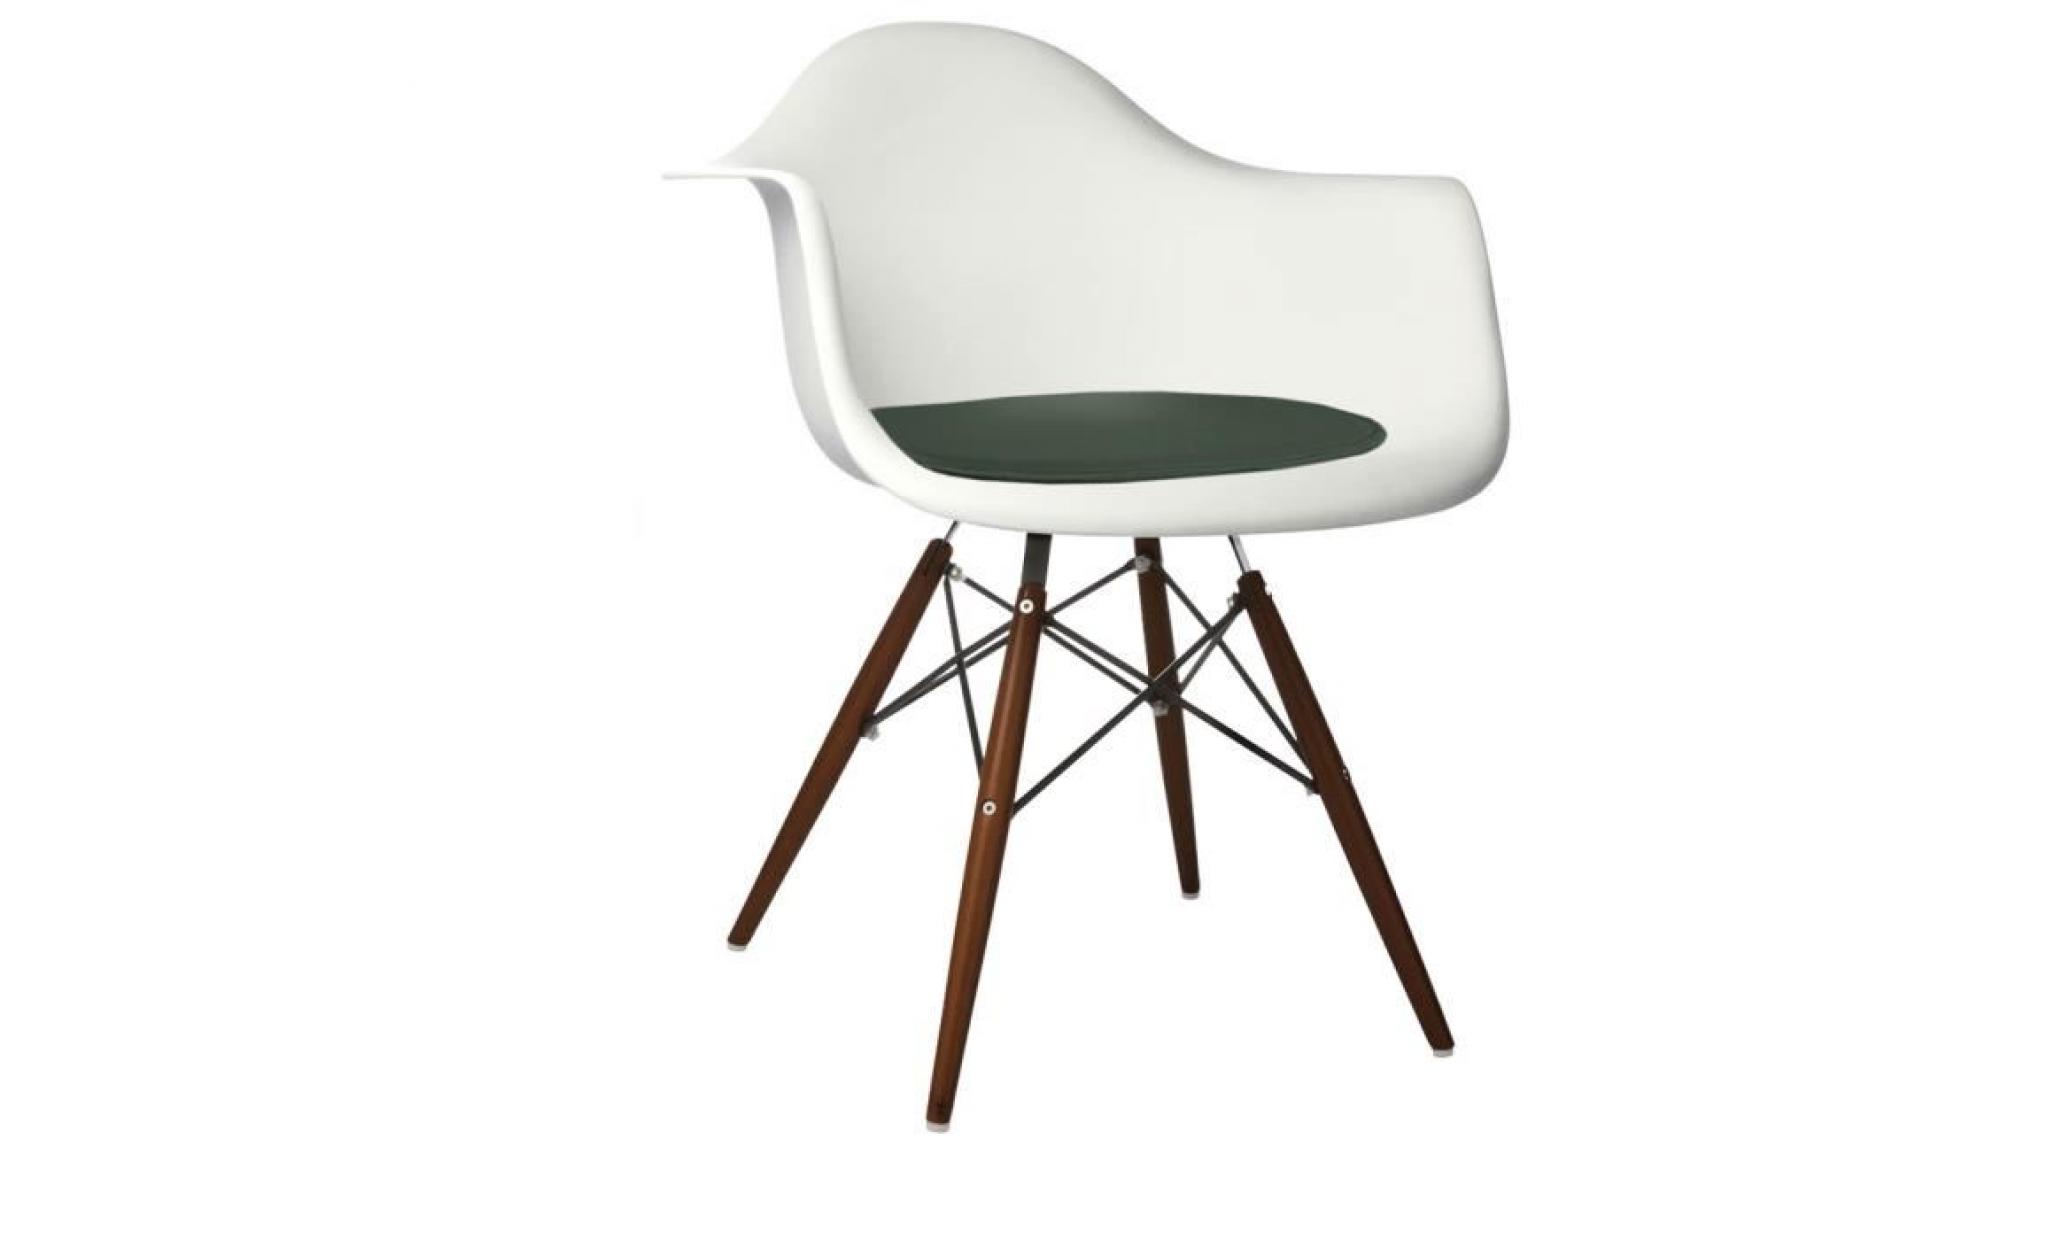 1 x fauteuil design blanc scandinave haut. 48 cm vert kaki pieds: bois naturel decopresto dp dawcdwh48 vk 1